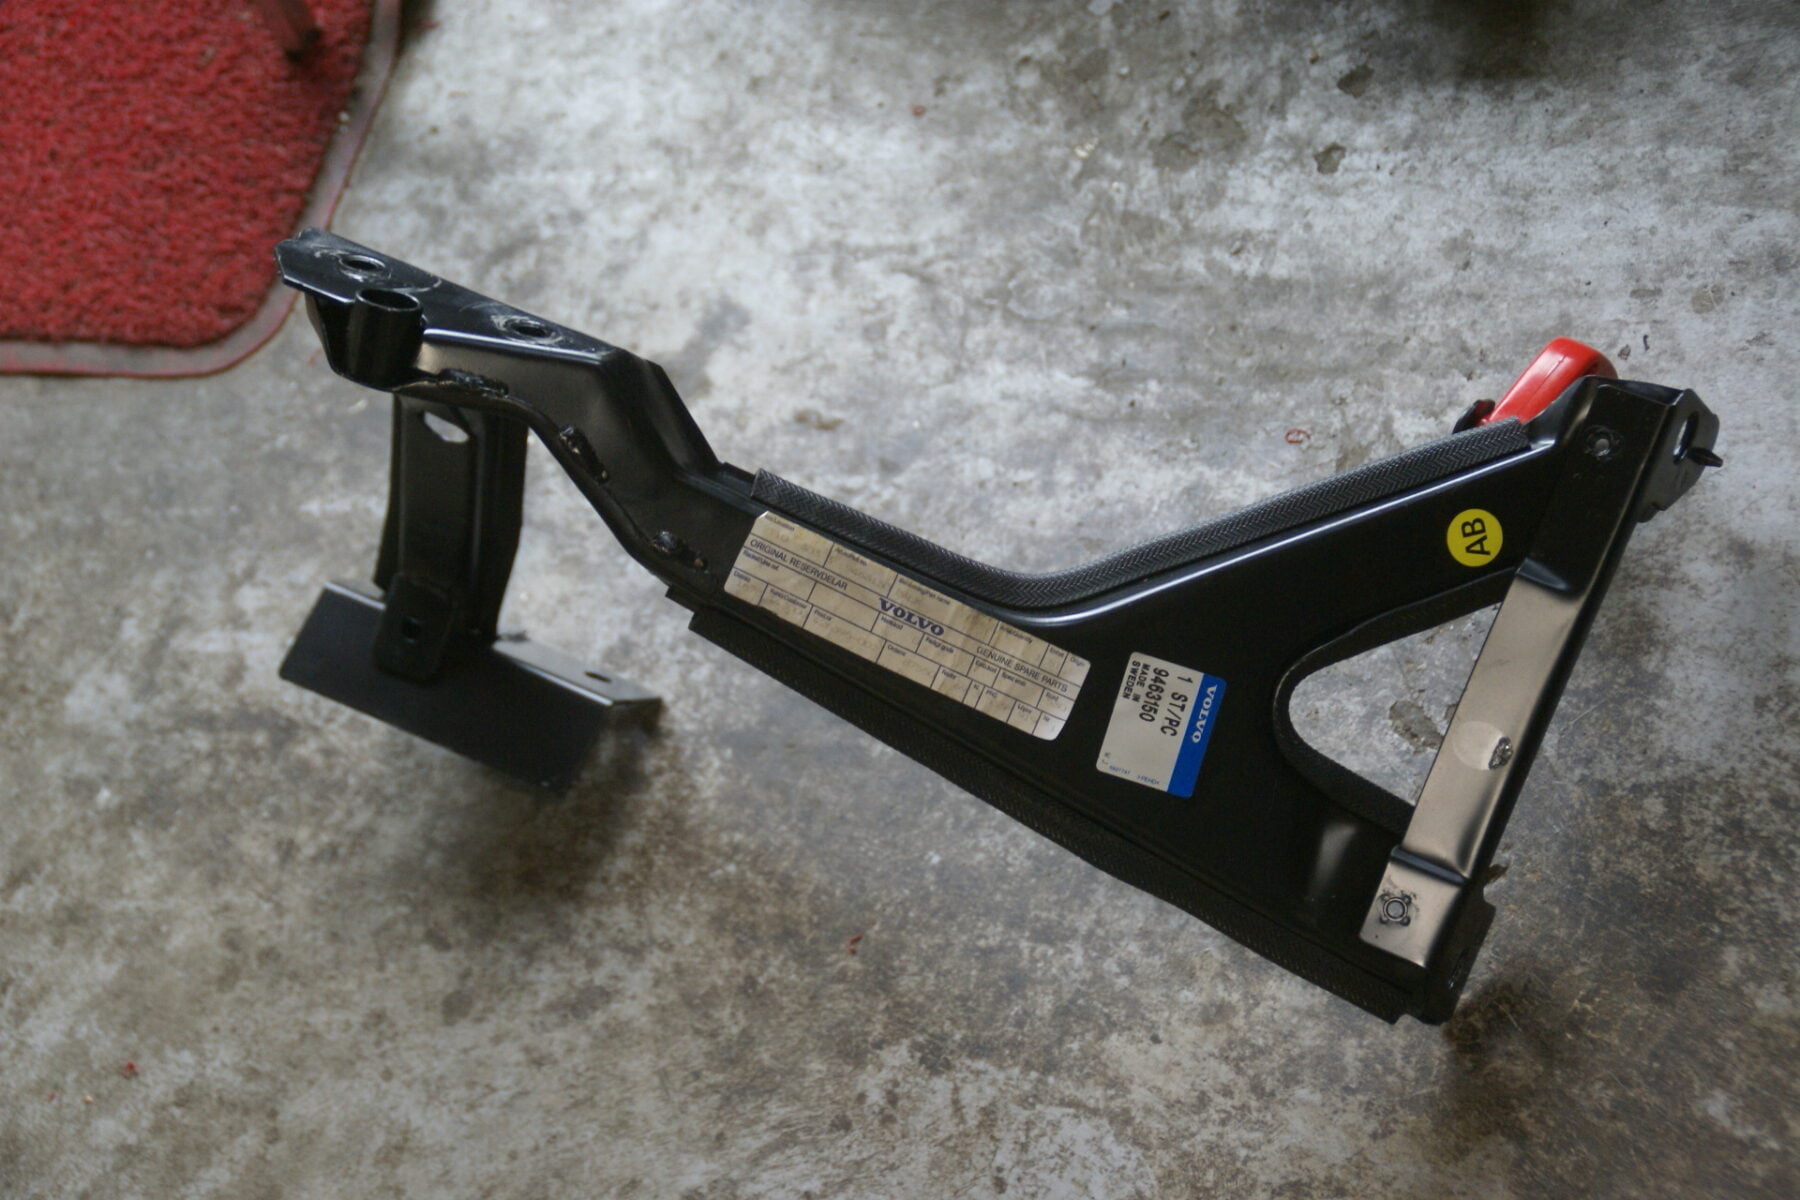 DSC06712 origineel dashboardbracket Volvo 940 NOS artnr 9463150-53f8a718